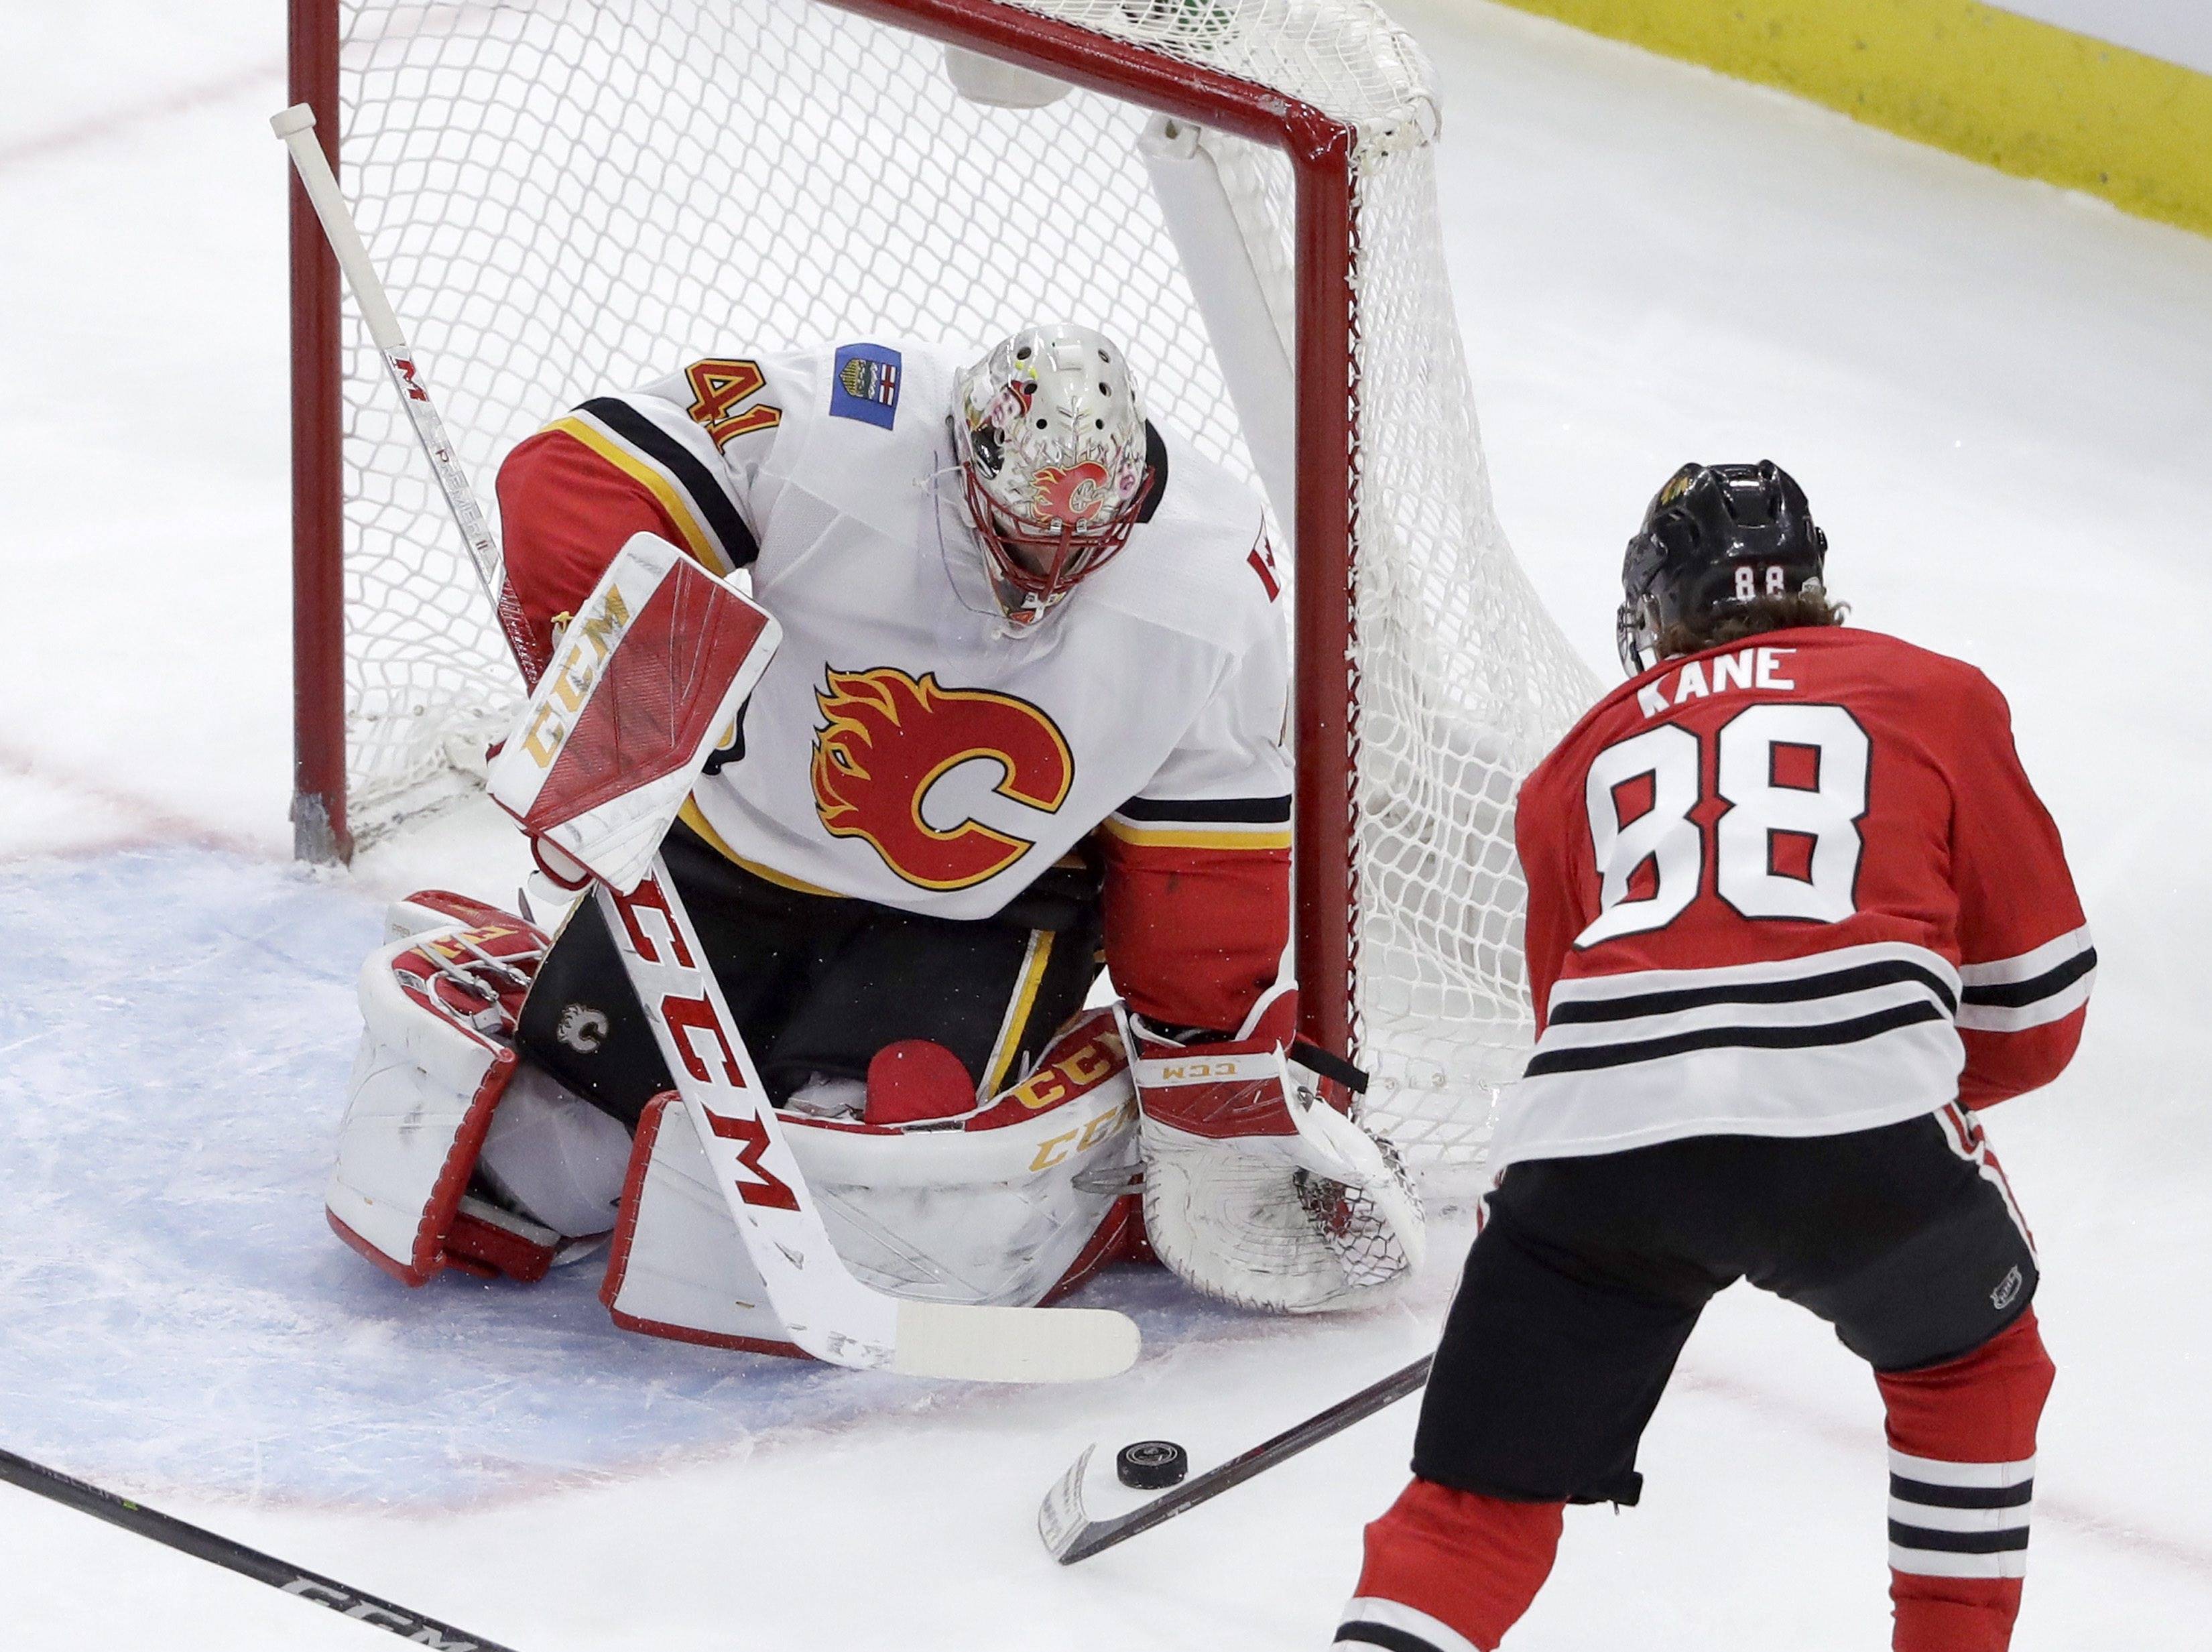 Hockey Night in Canada on X: Blackhawks' Patrick Kane claims no